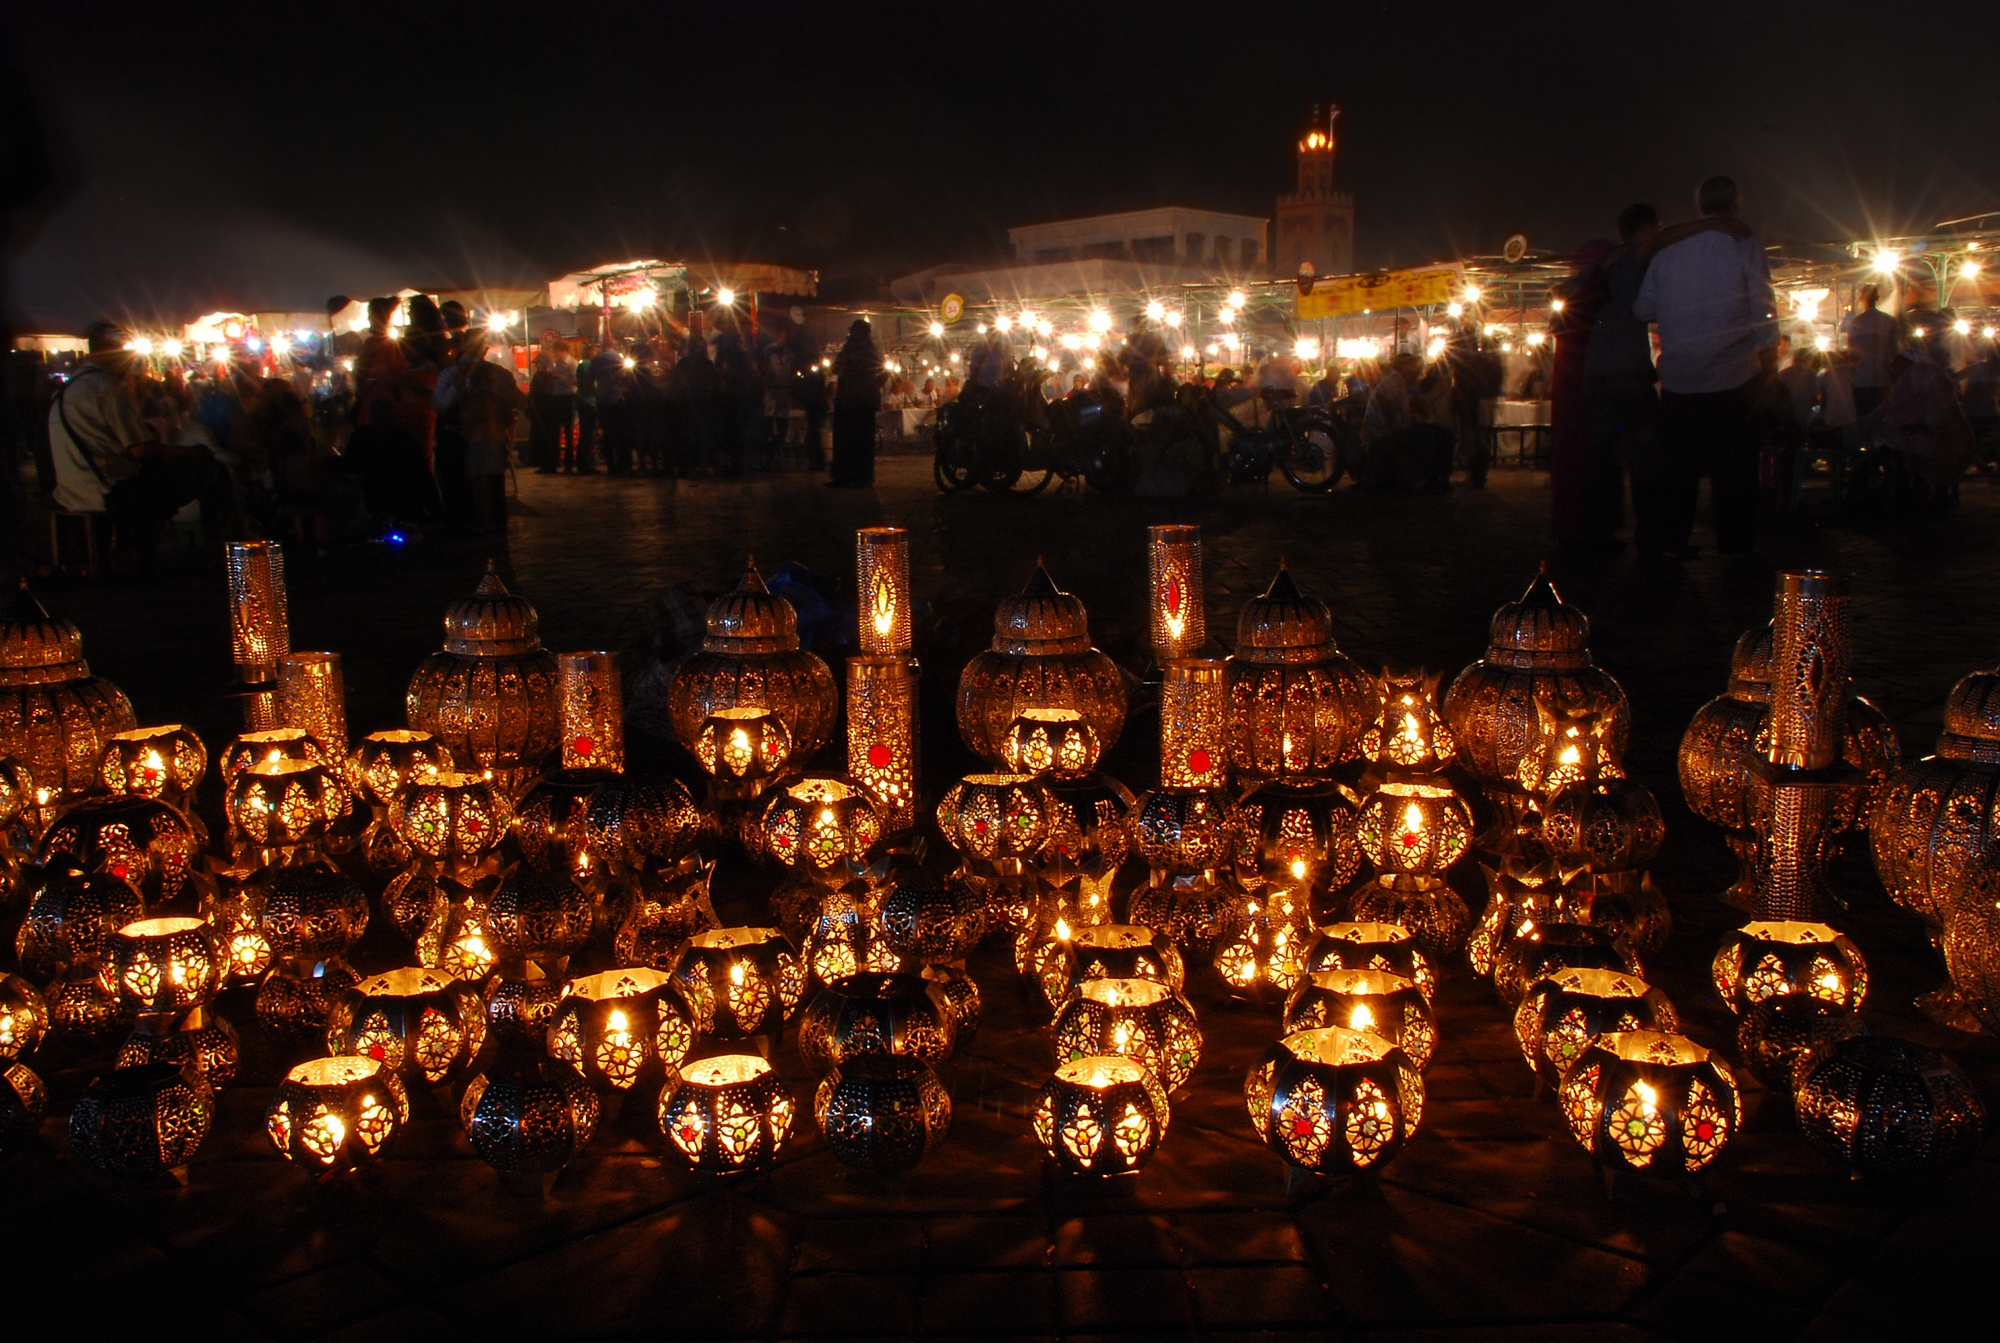 Lanterns and nightlife in the Jemaa El Fna...